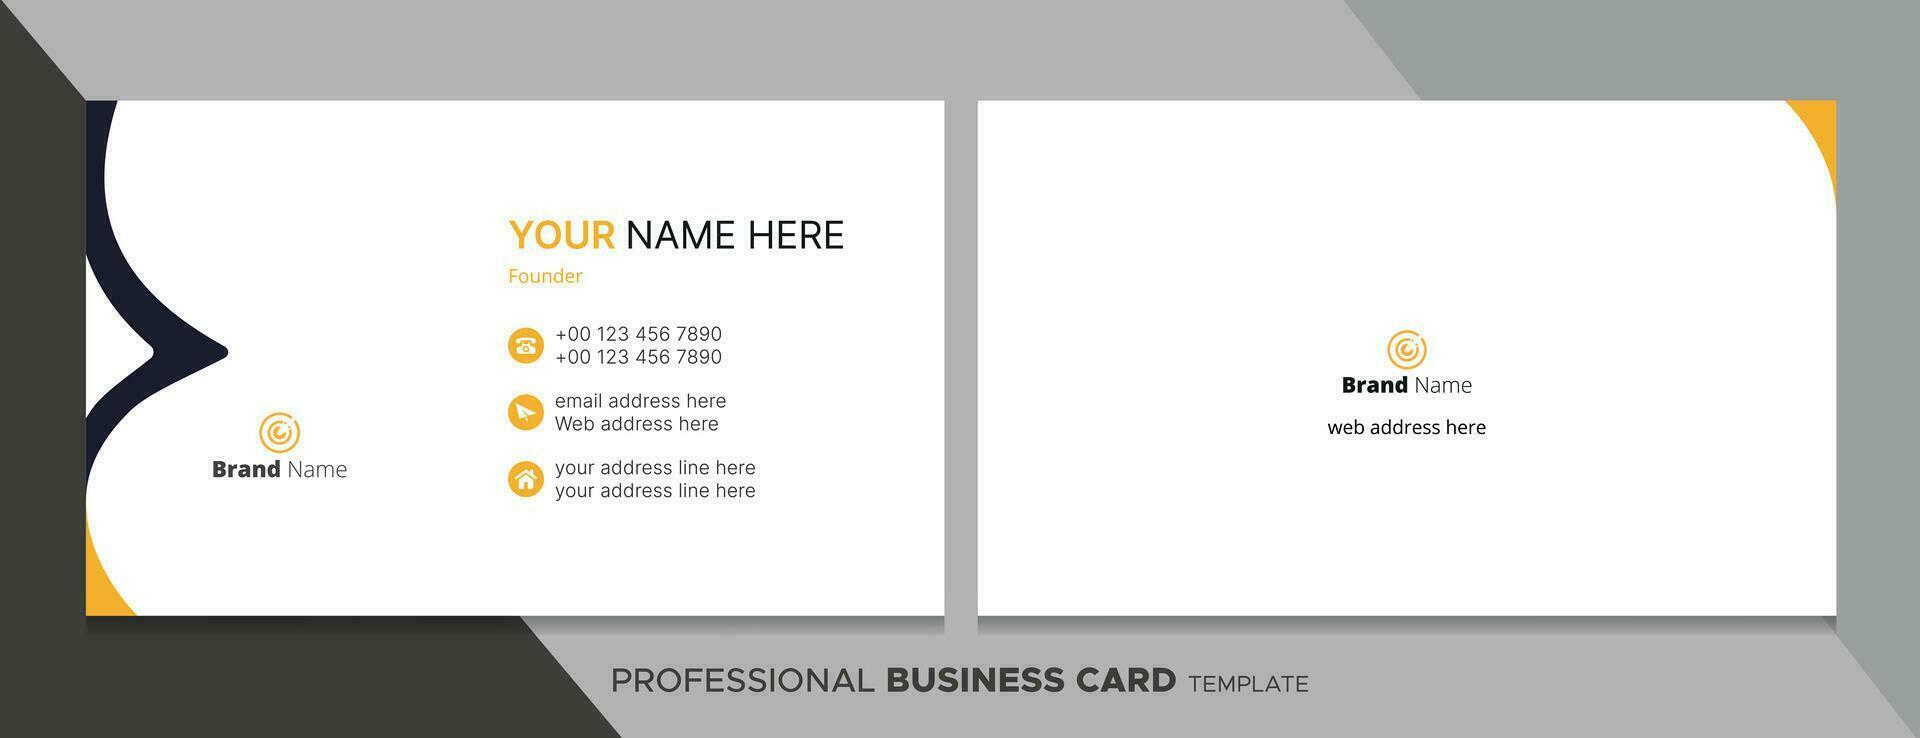 Modern Professional Business Card Template Design. vector